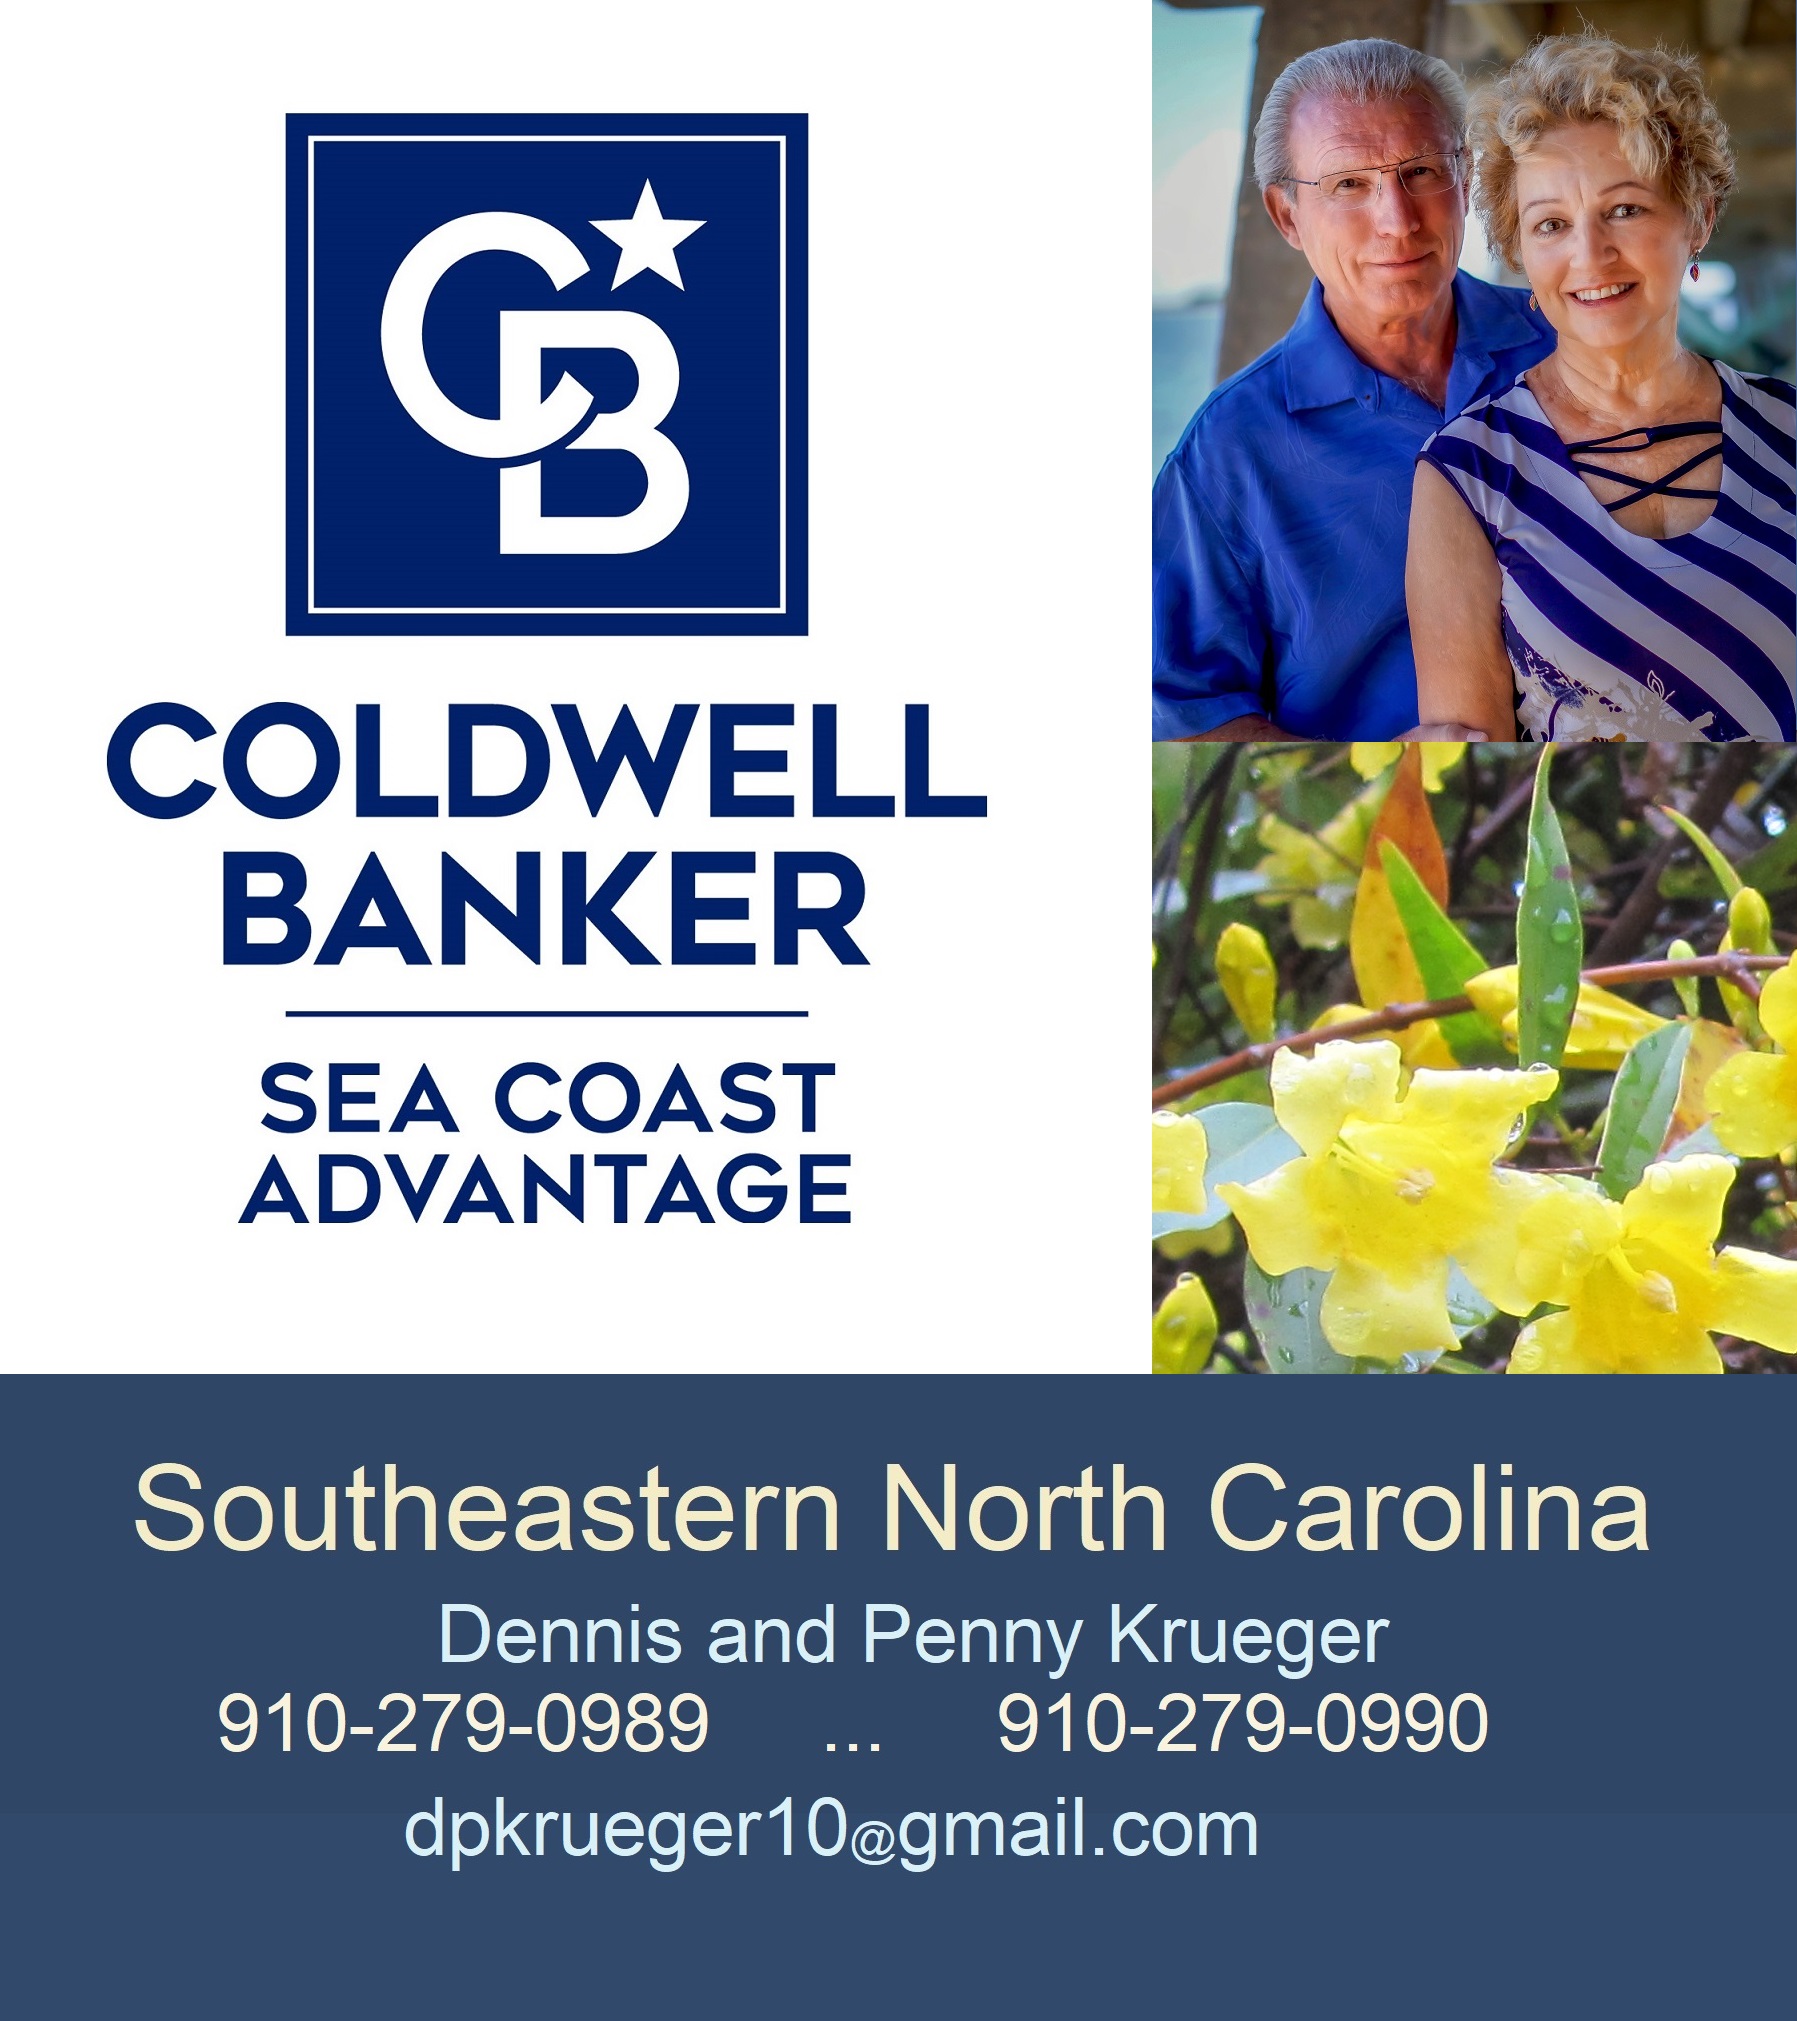 Southeastern NC Real Estate Information